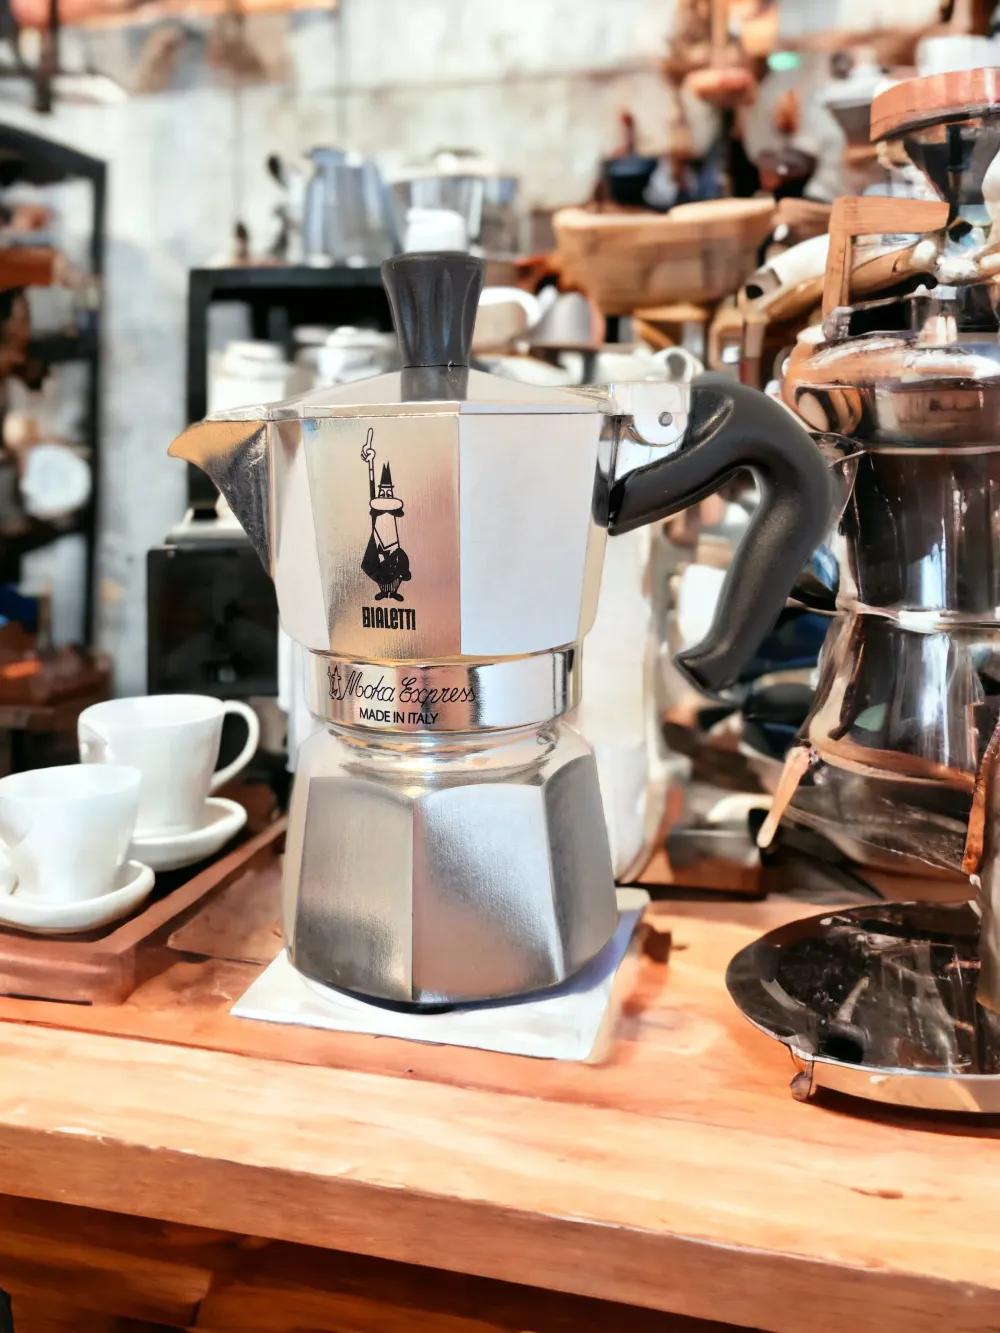 Die Mokka-Kanne (Bialetti): perfekt für Filterkaffee